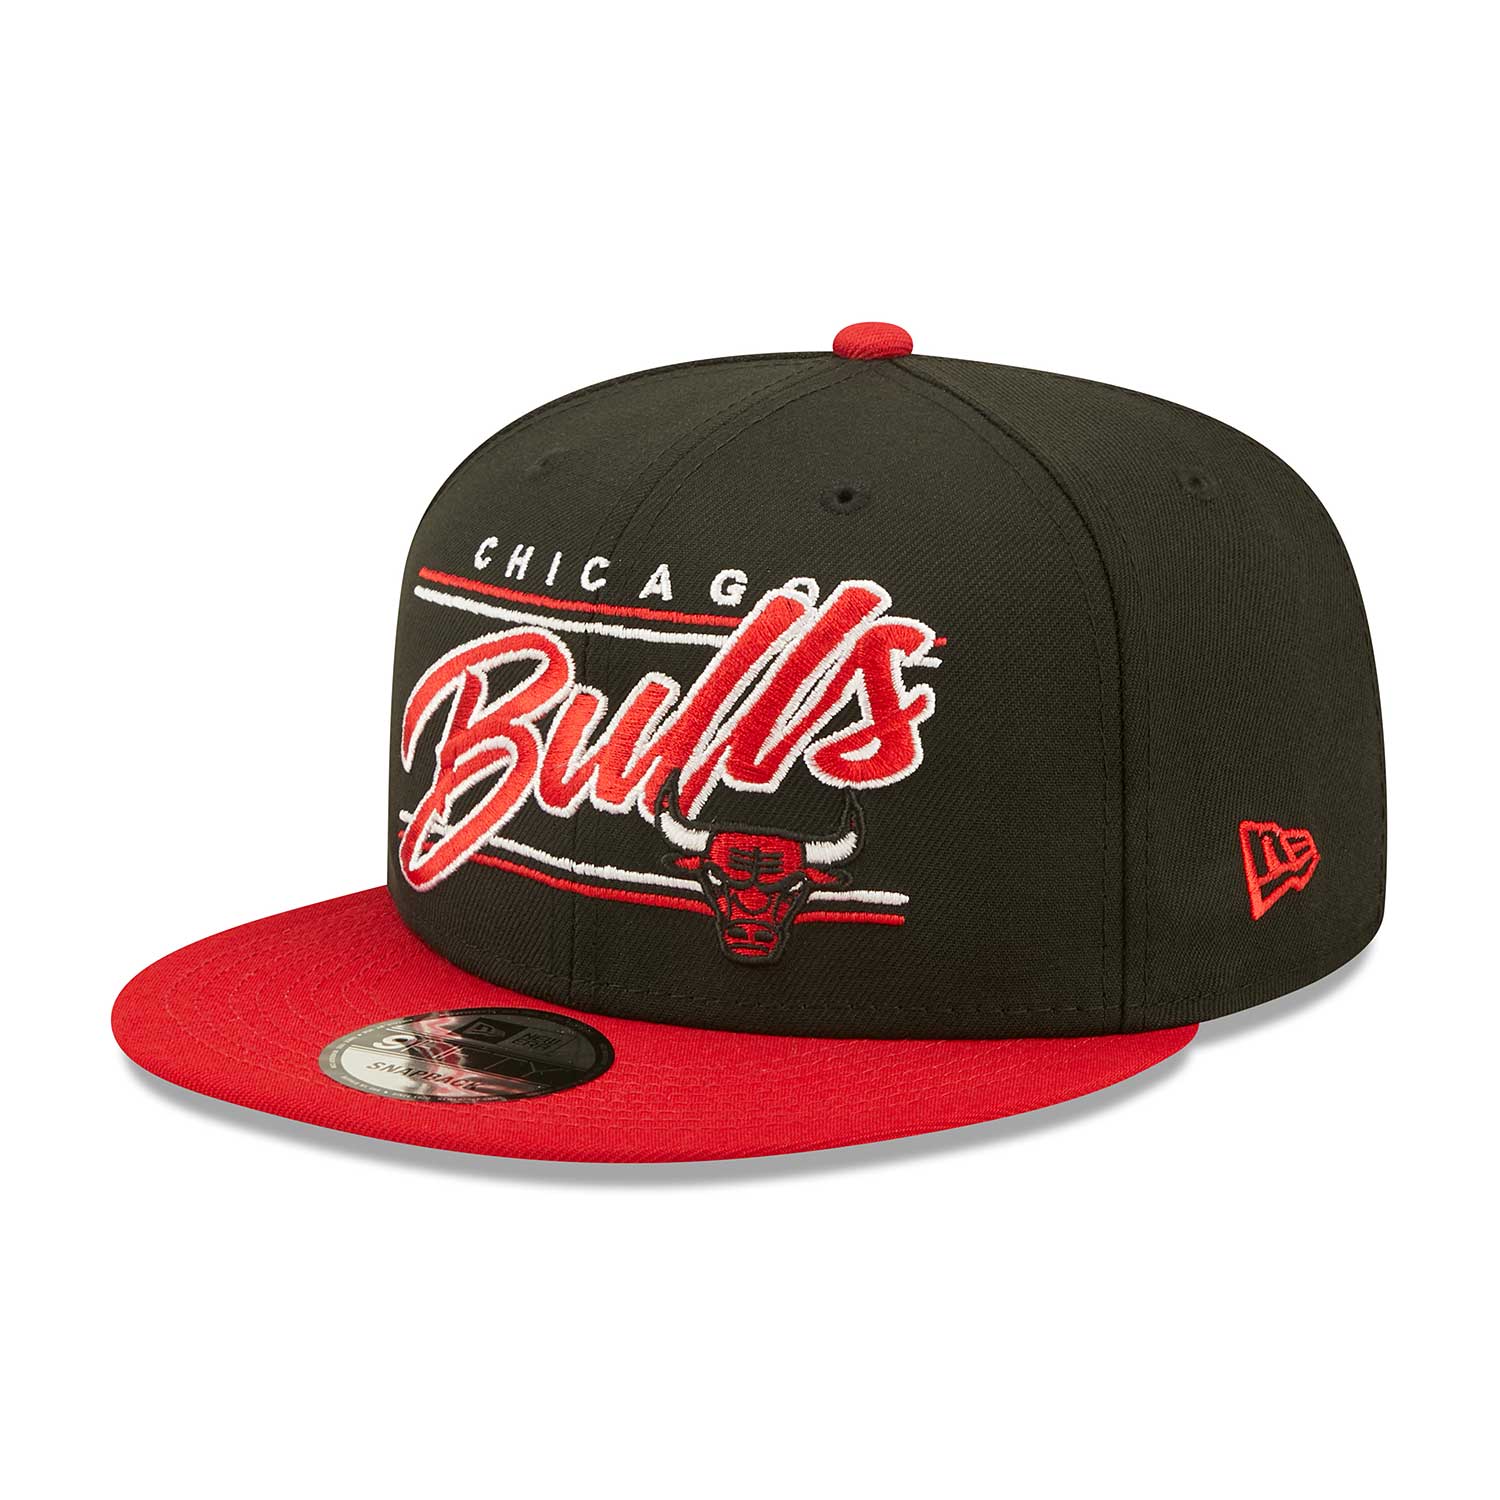 New Era Athletic Logo 9Fifty Red Mesh Snapback Hat